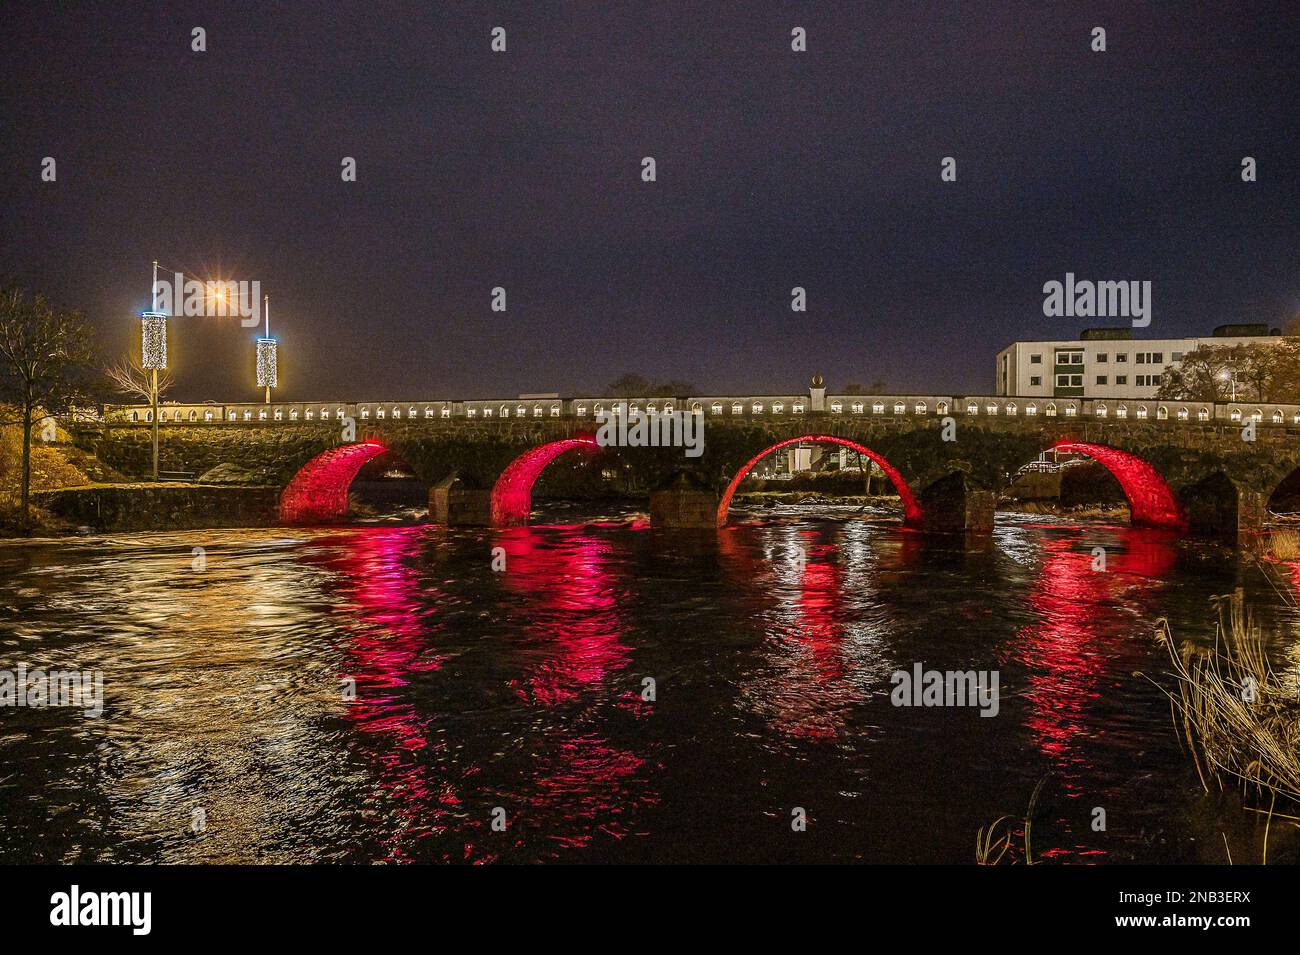 Tullbron at night, an old stone bridge crossing the river Atran in Falkenberg, Sweden, February 11, 2023 Stock Photo